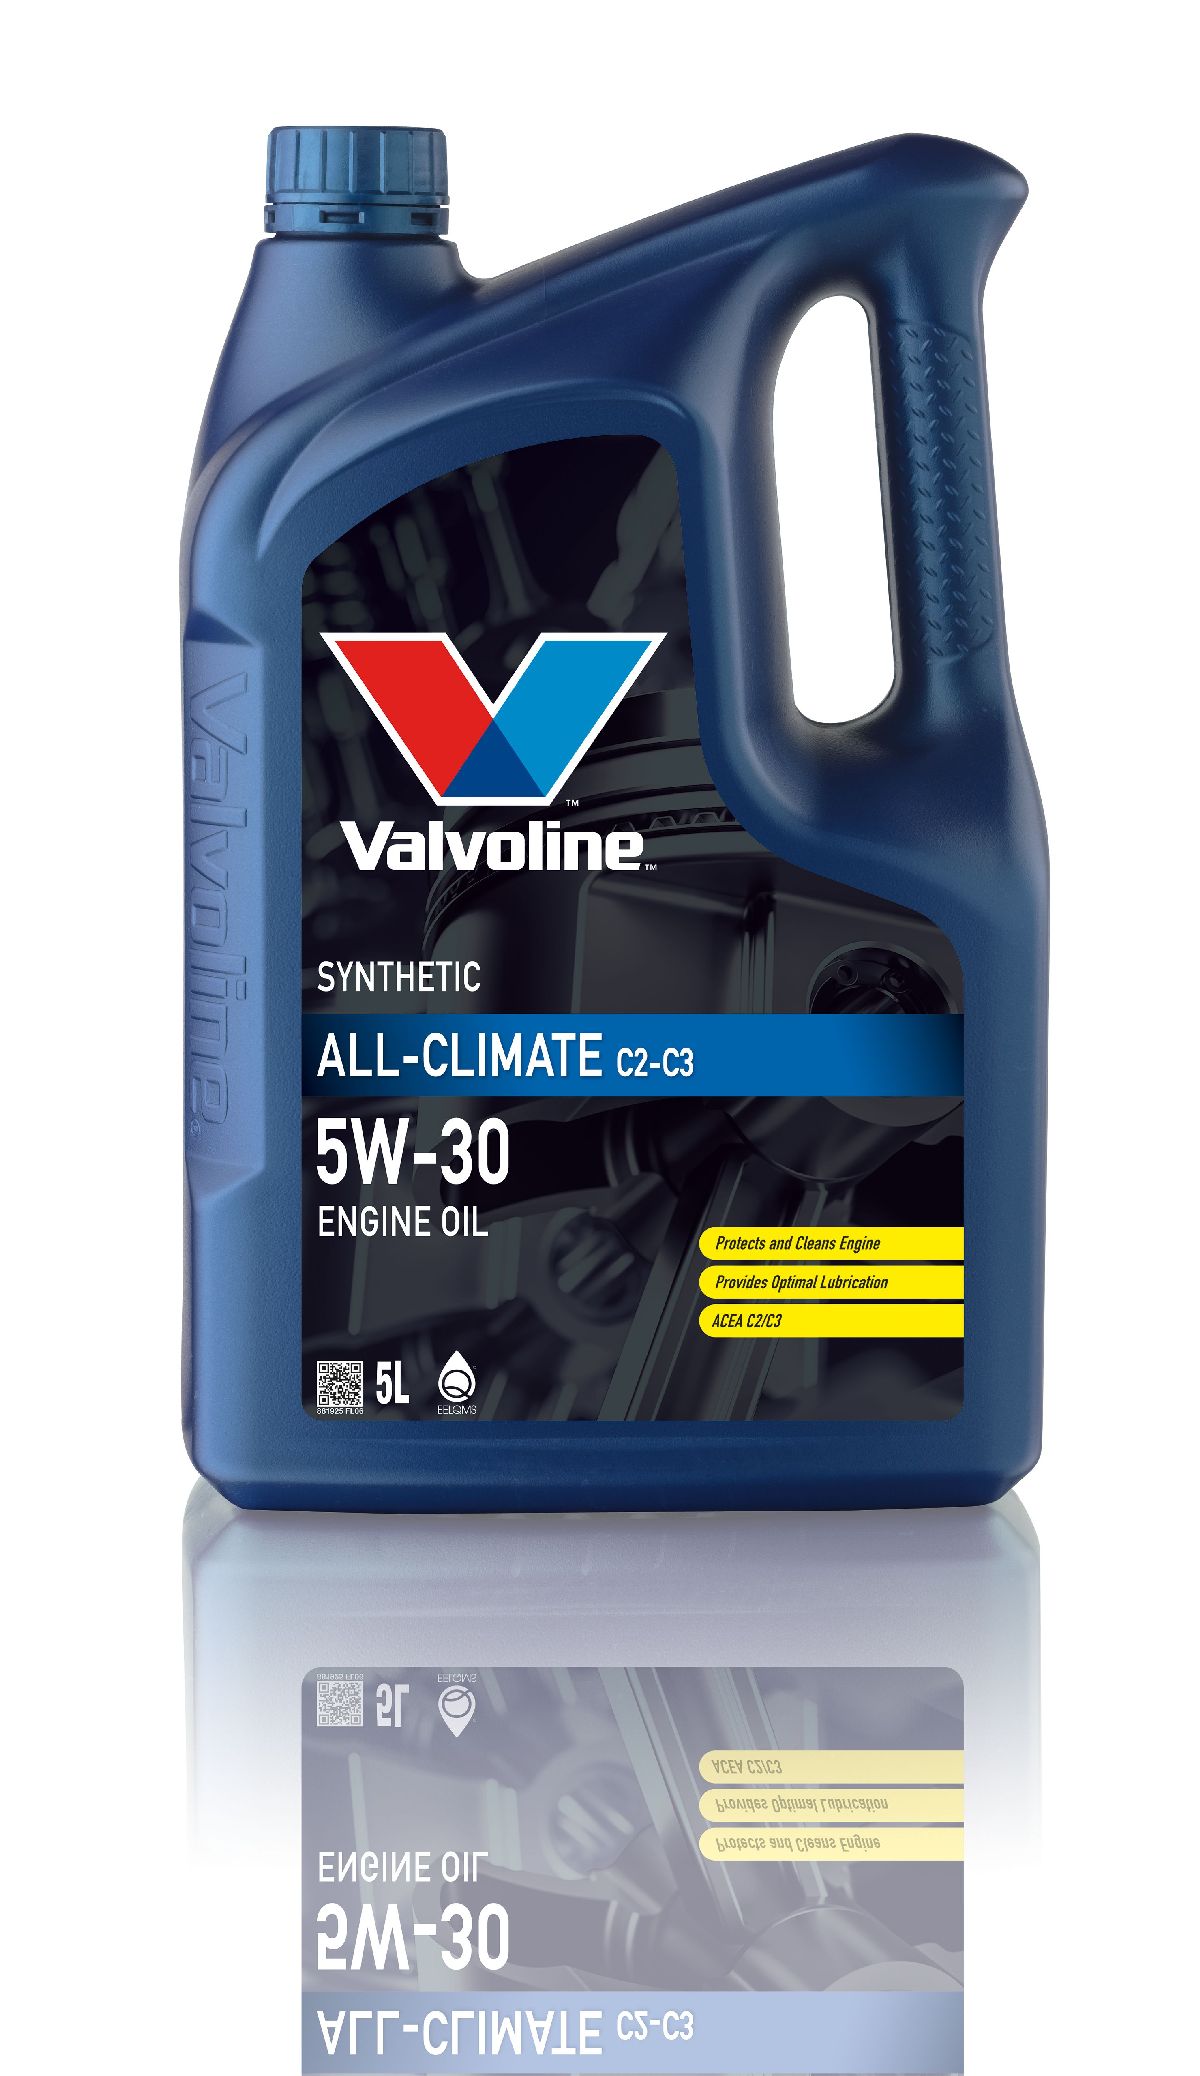 Valvoline All-Climate C2/C3 5W-30